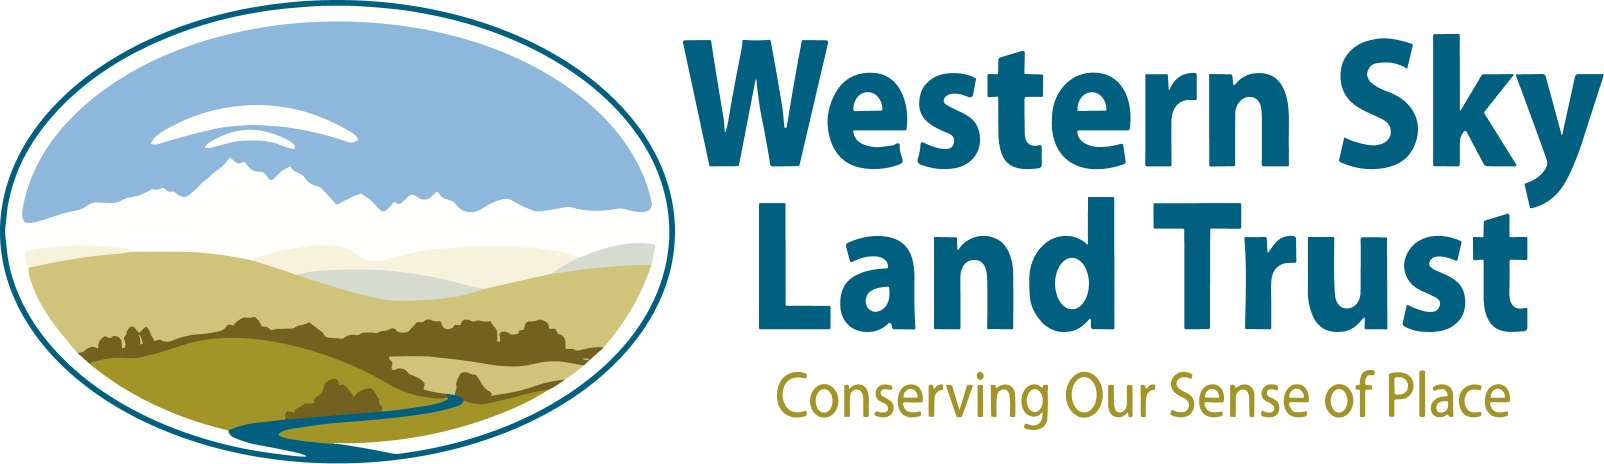 Logo for Western Sky Land Trust on a transparent background